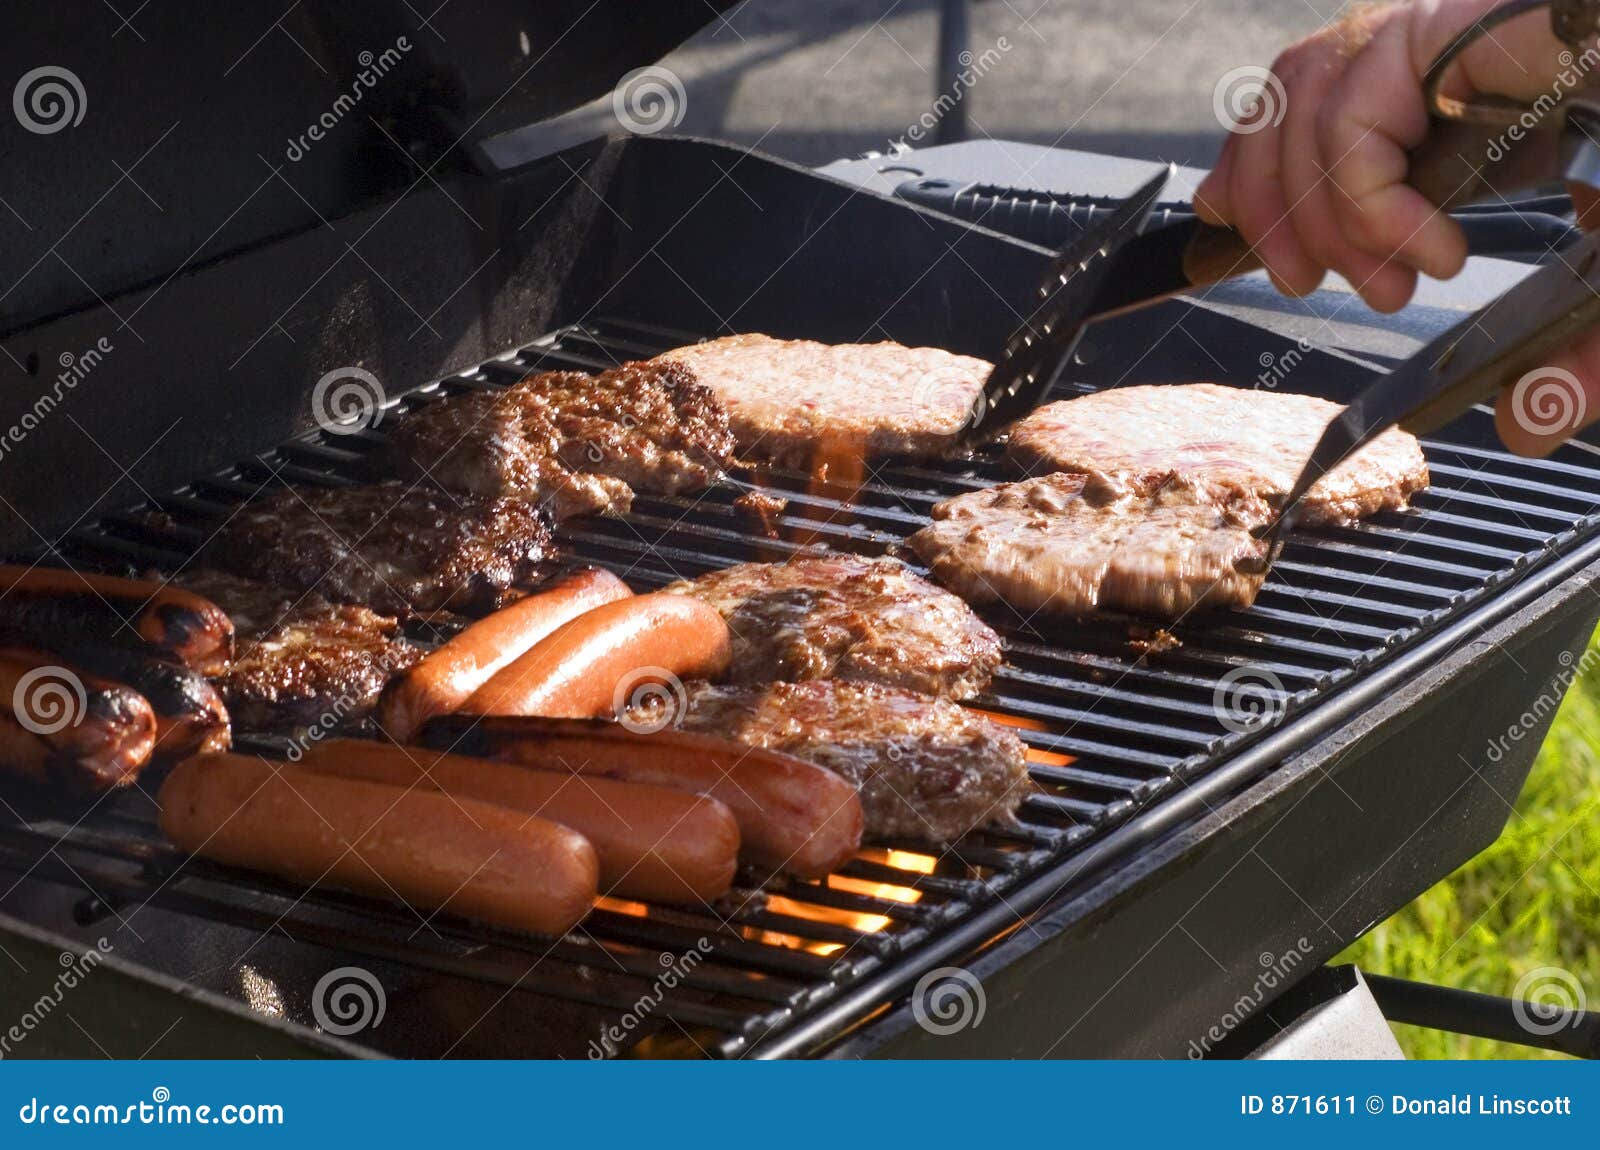 summer grilling